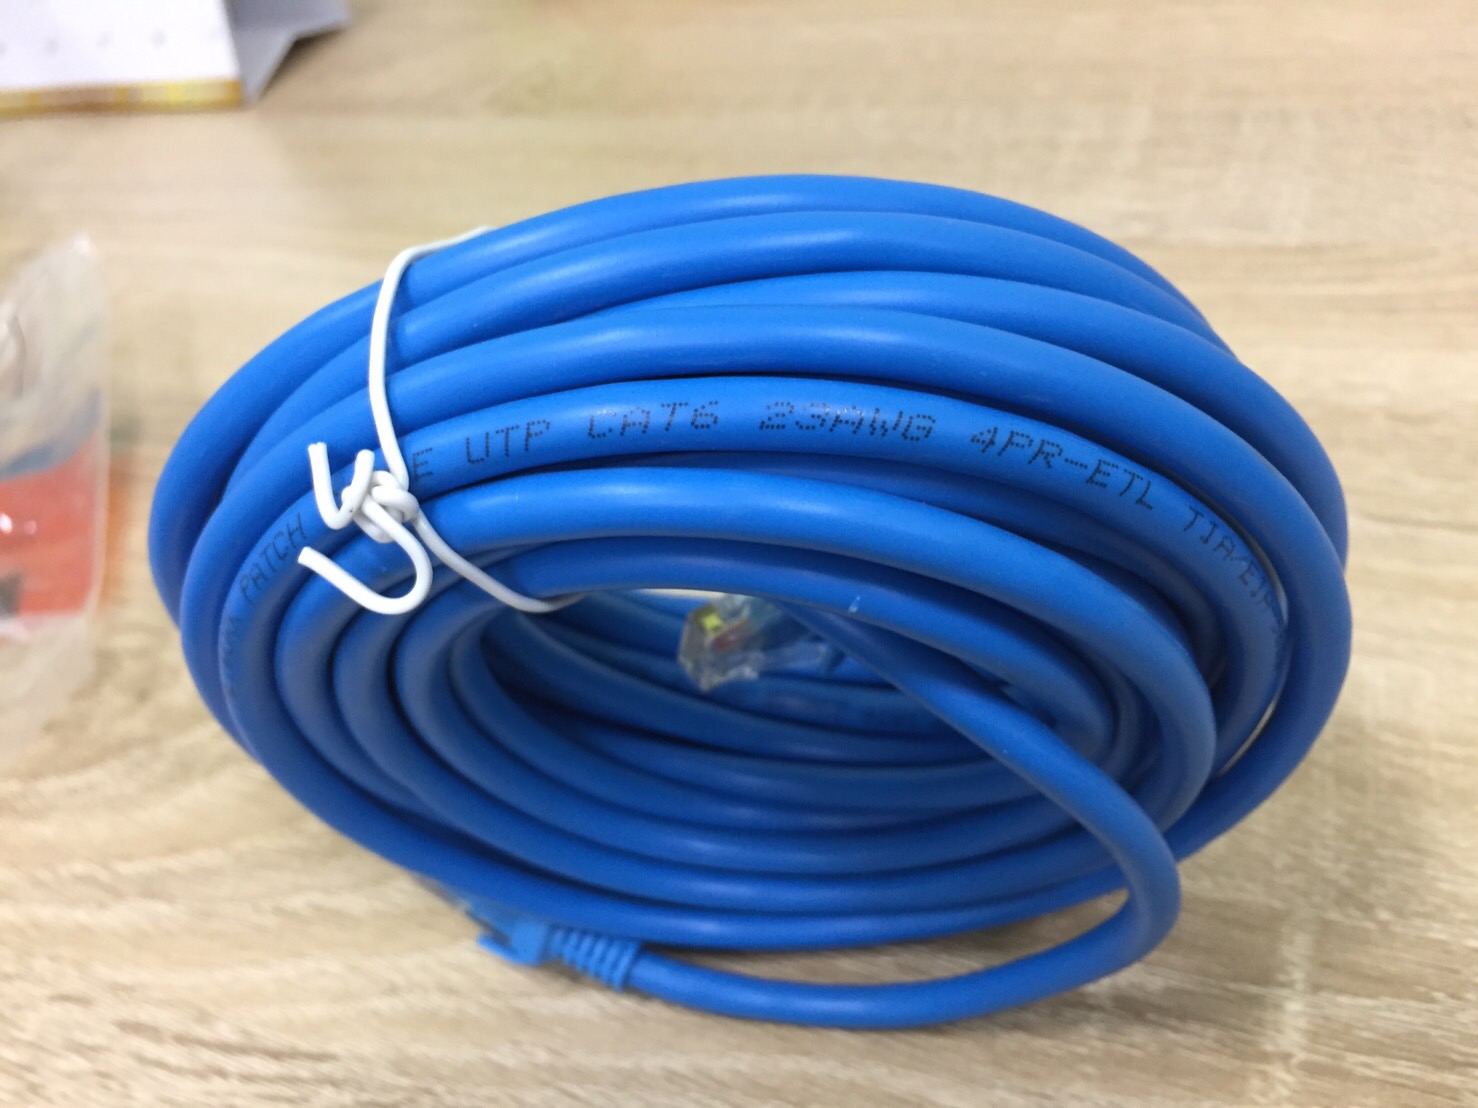 Cable LAN 15เมตร